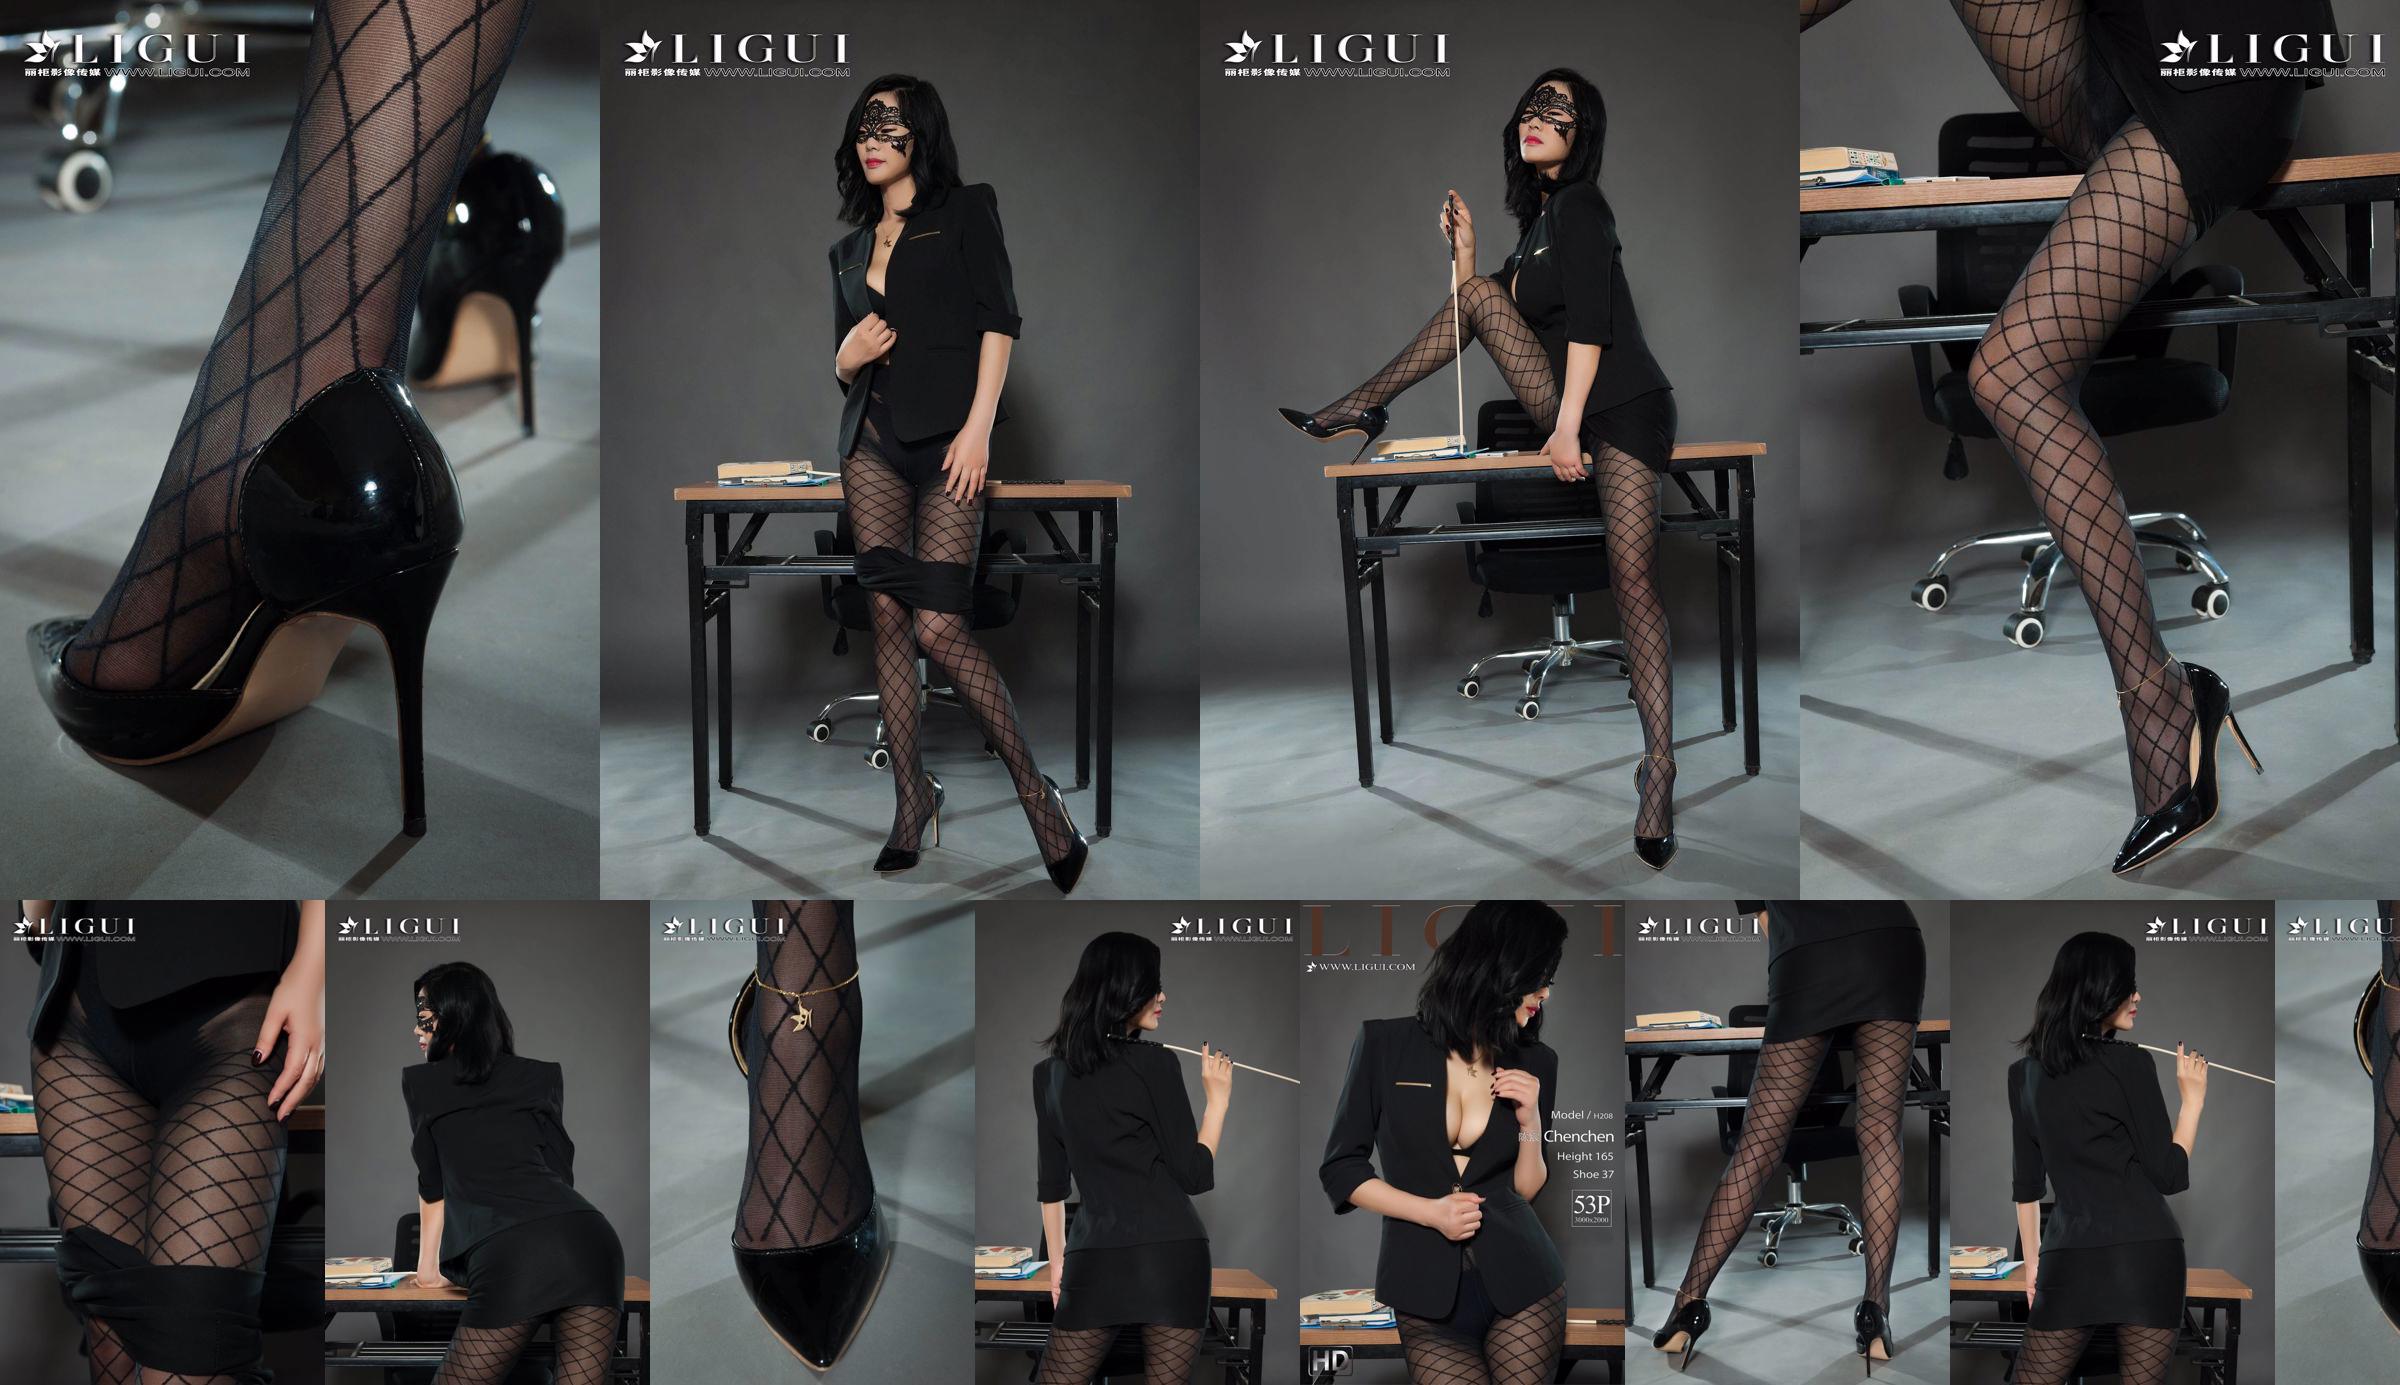 Modelo de pierna Chen Chen "Black Silk Milf" [Ligui Liguil] Belleza de Internet No.76a3d0 Página 1